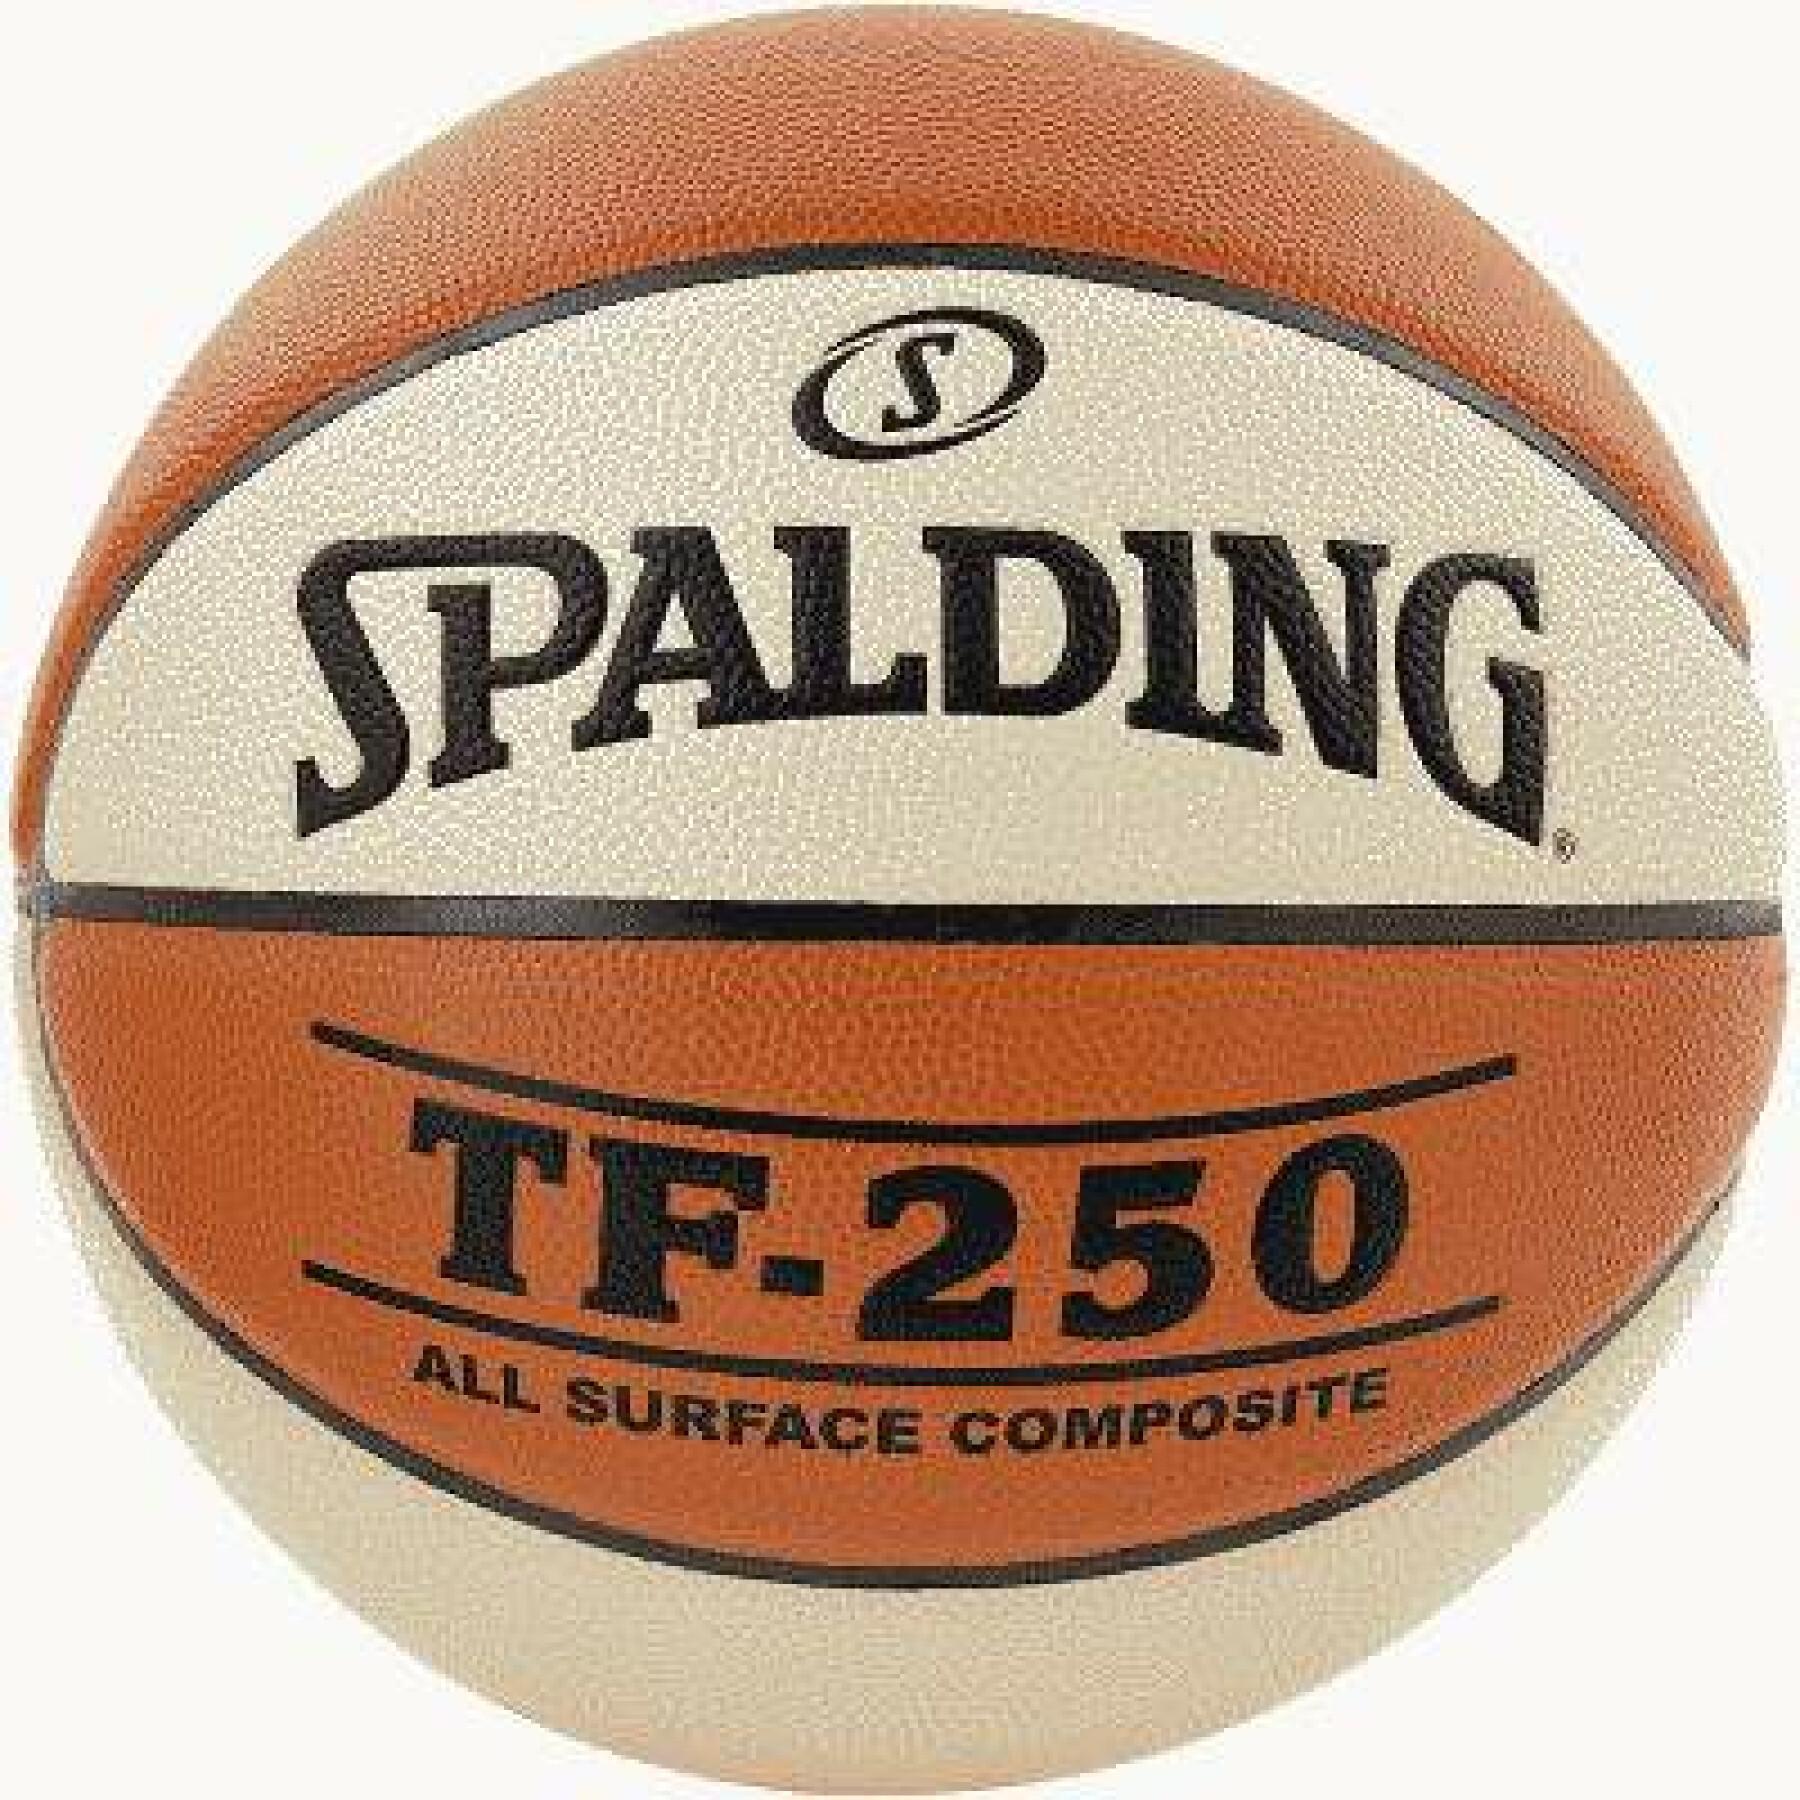 Koszykówka Spalding TF250 indoor/outdoor